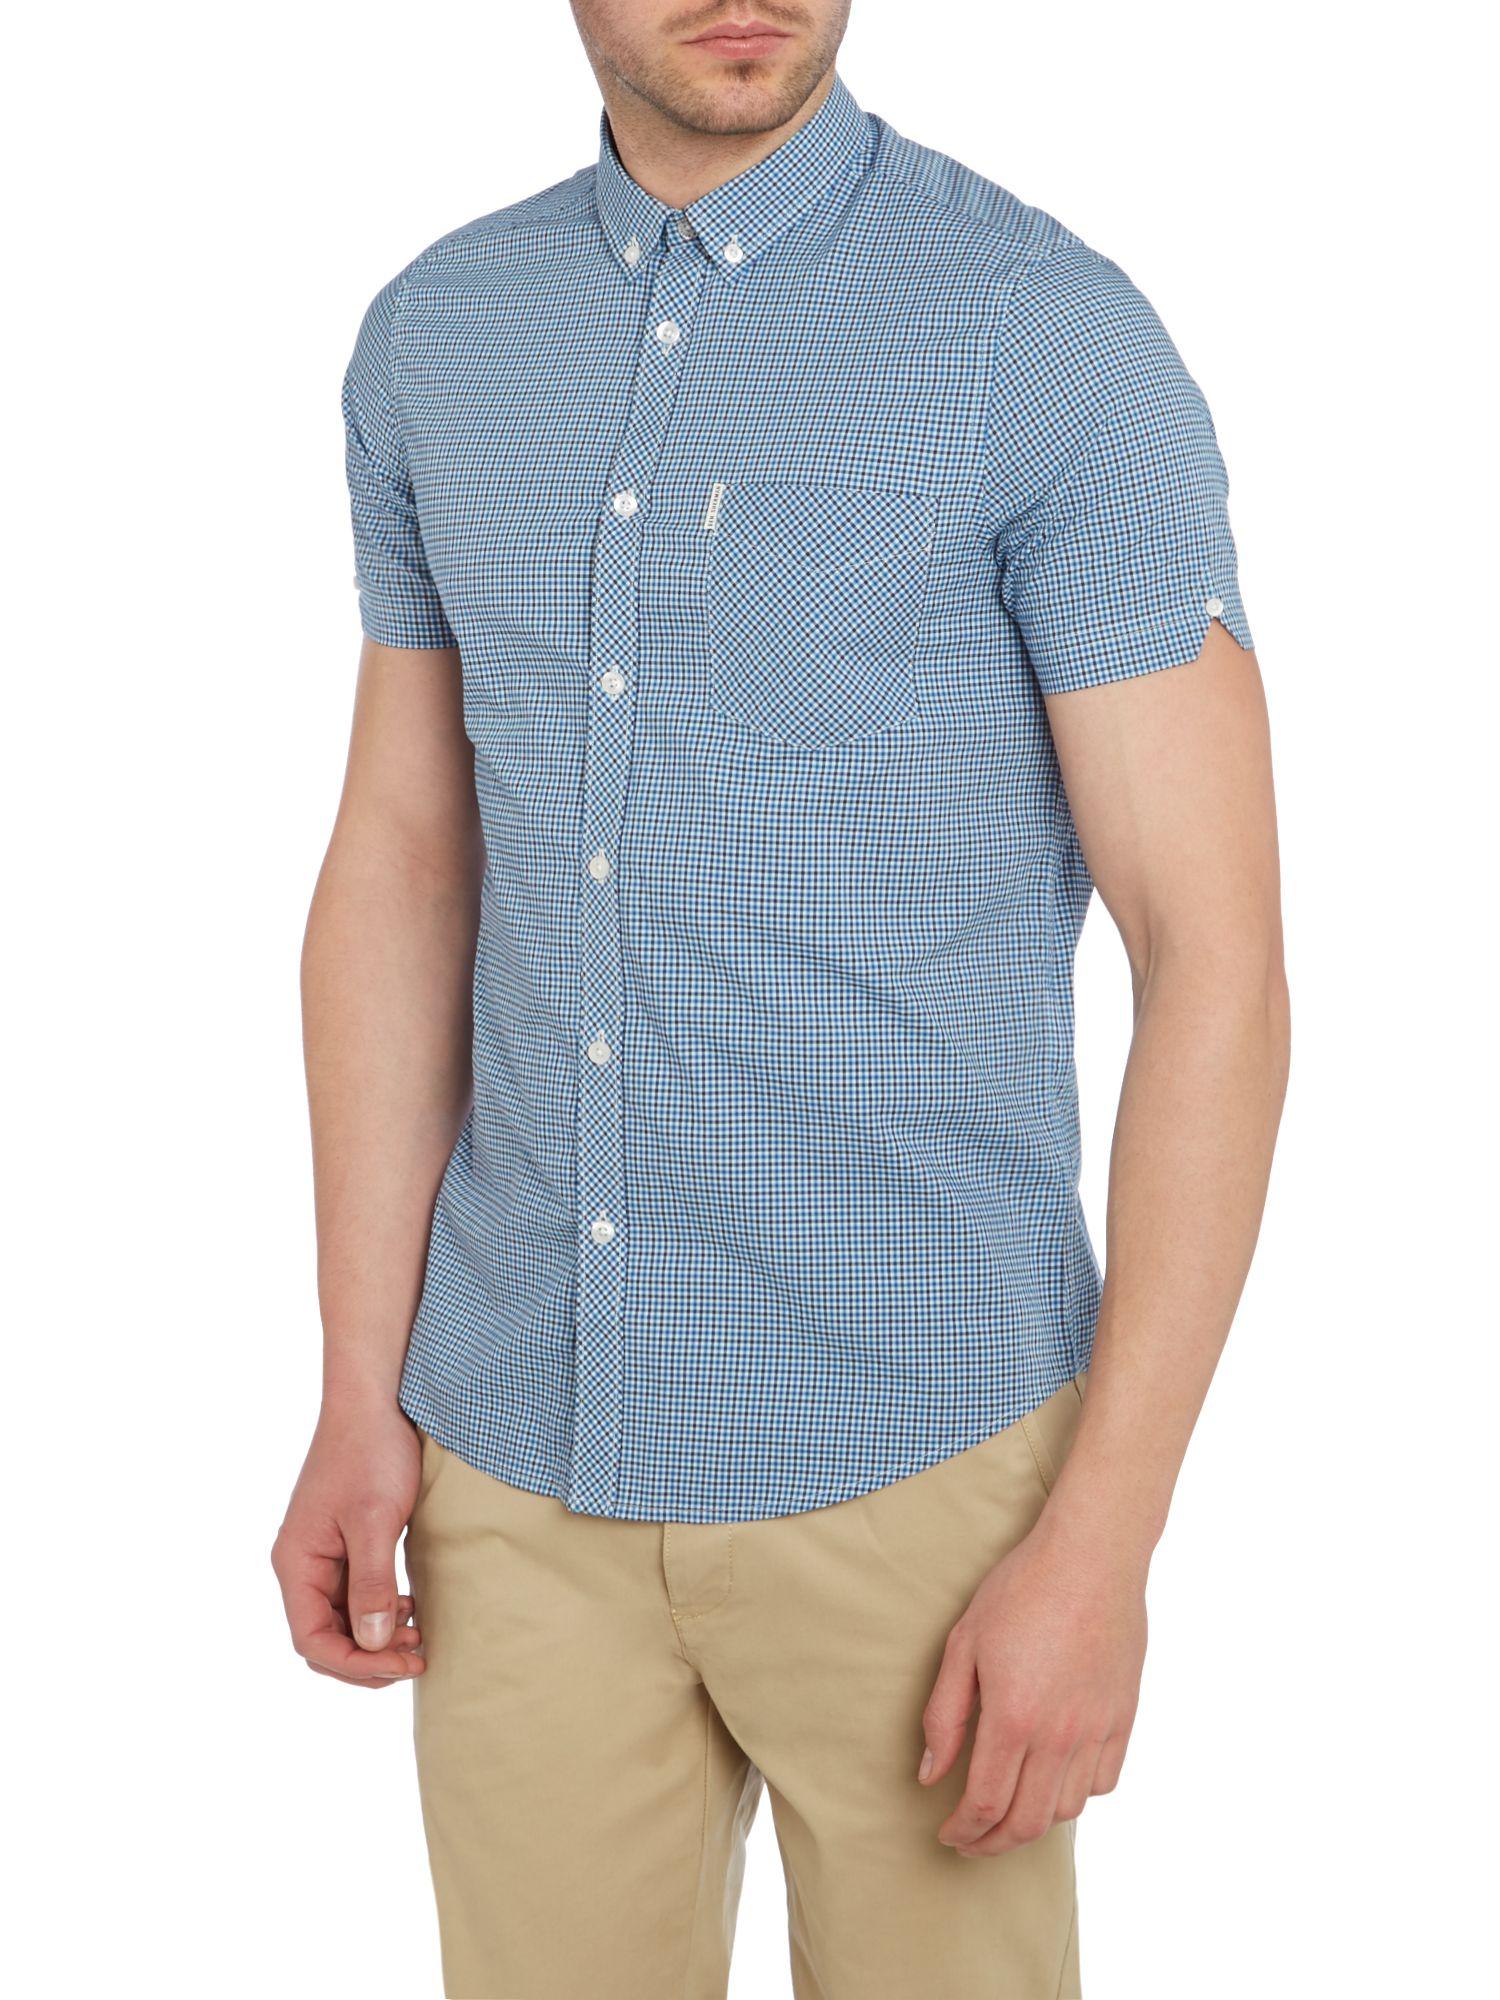 Ben Sherman Mini Mod Check Short Sleeve Shirt in Blue for Men - Lyst